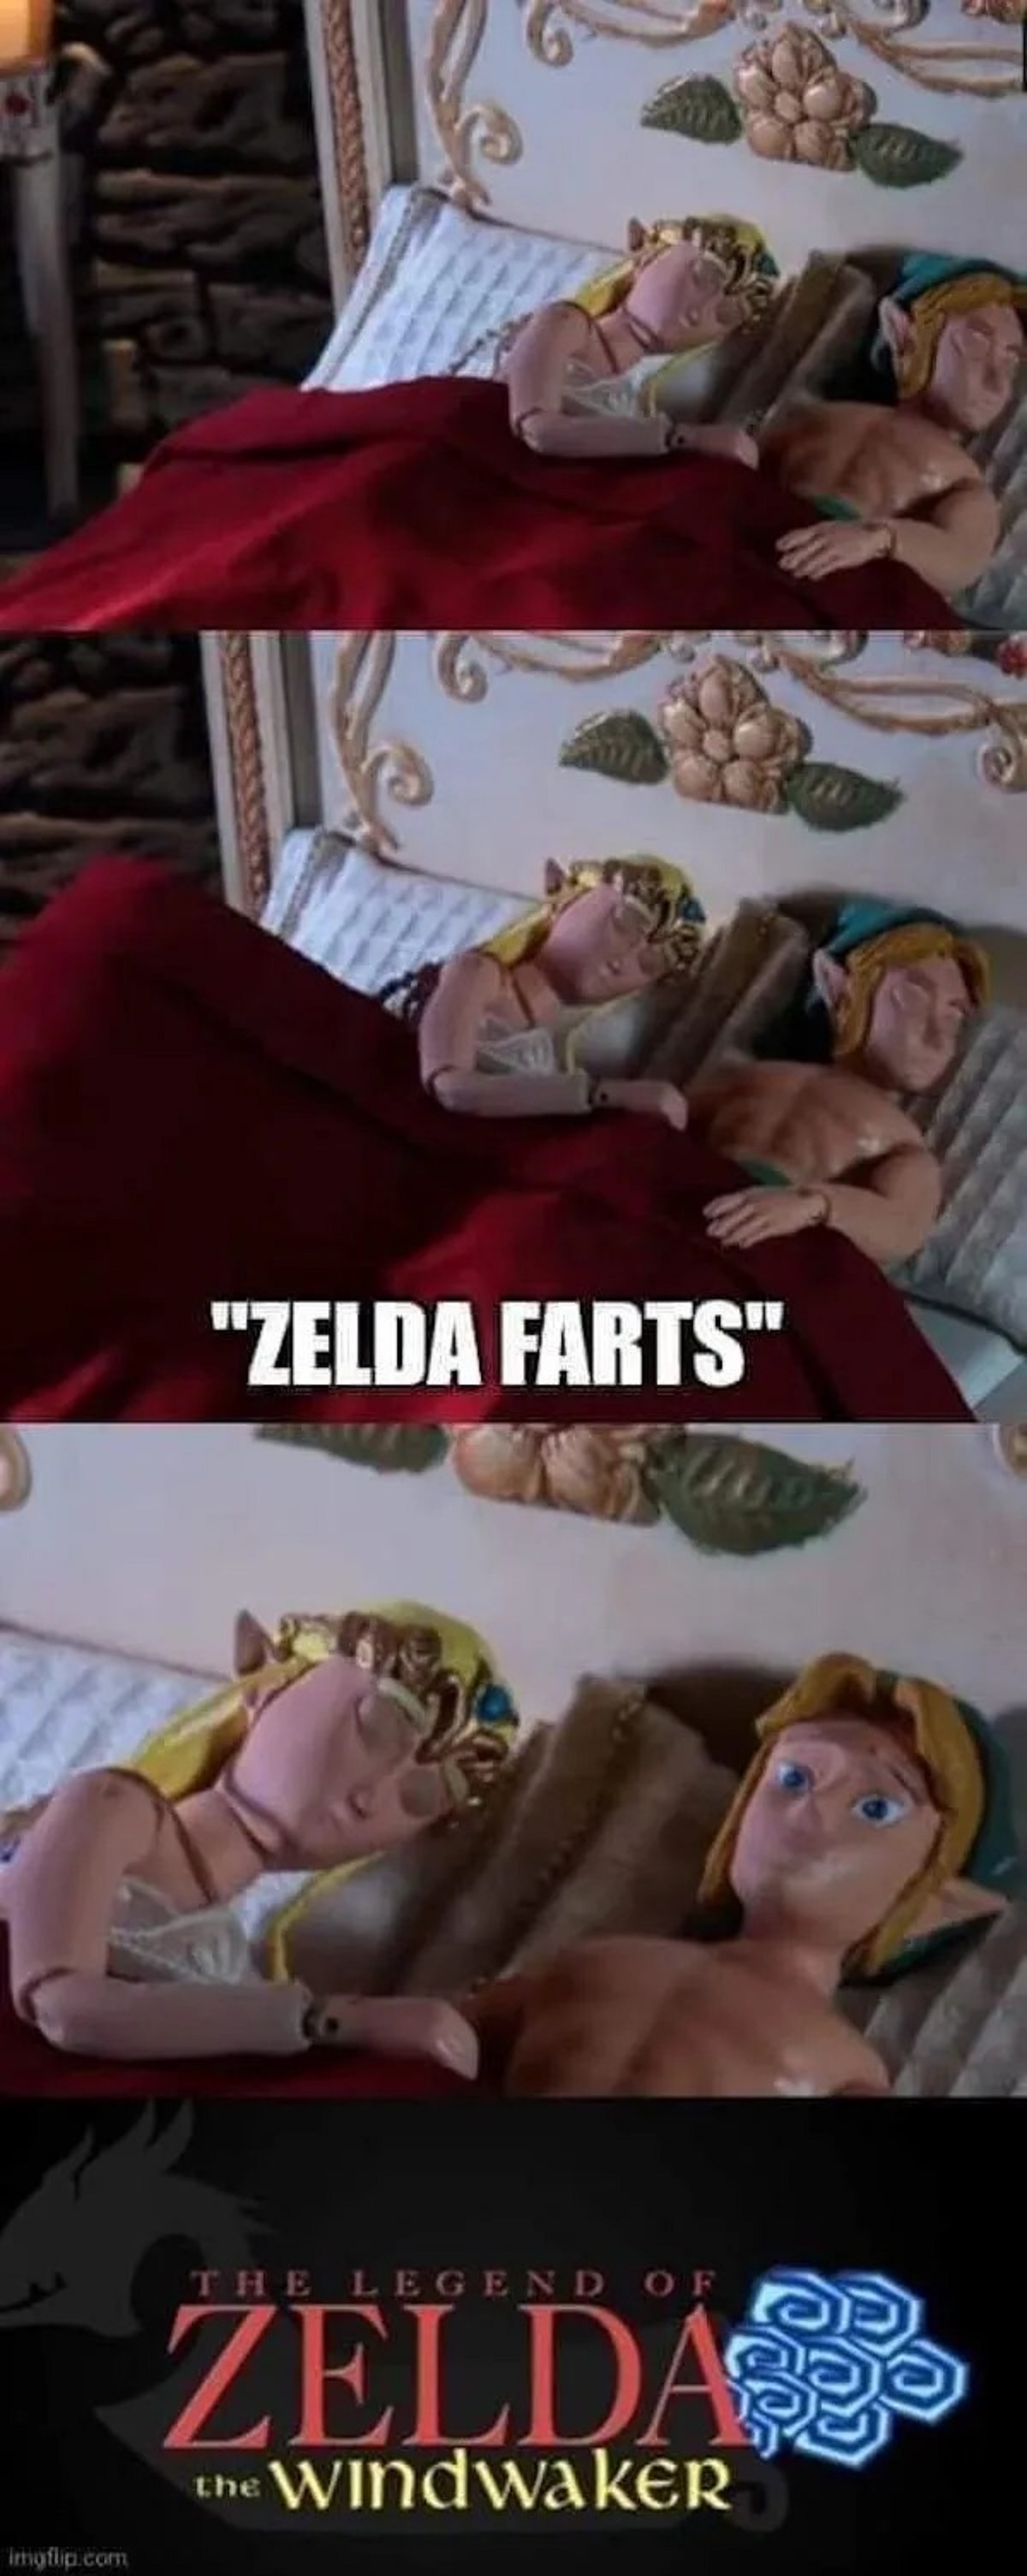 fiction - "Zelda Farts" The Legend Of Zelda the WindwakeR